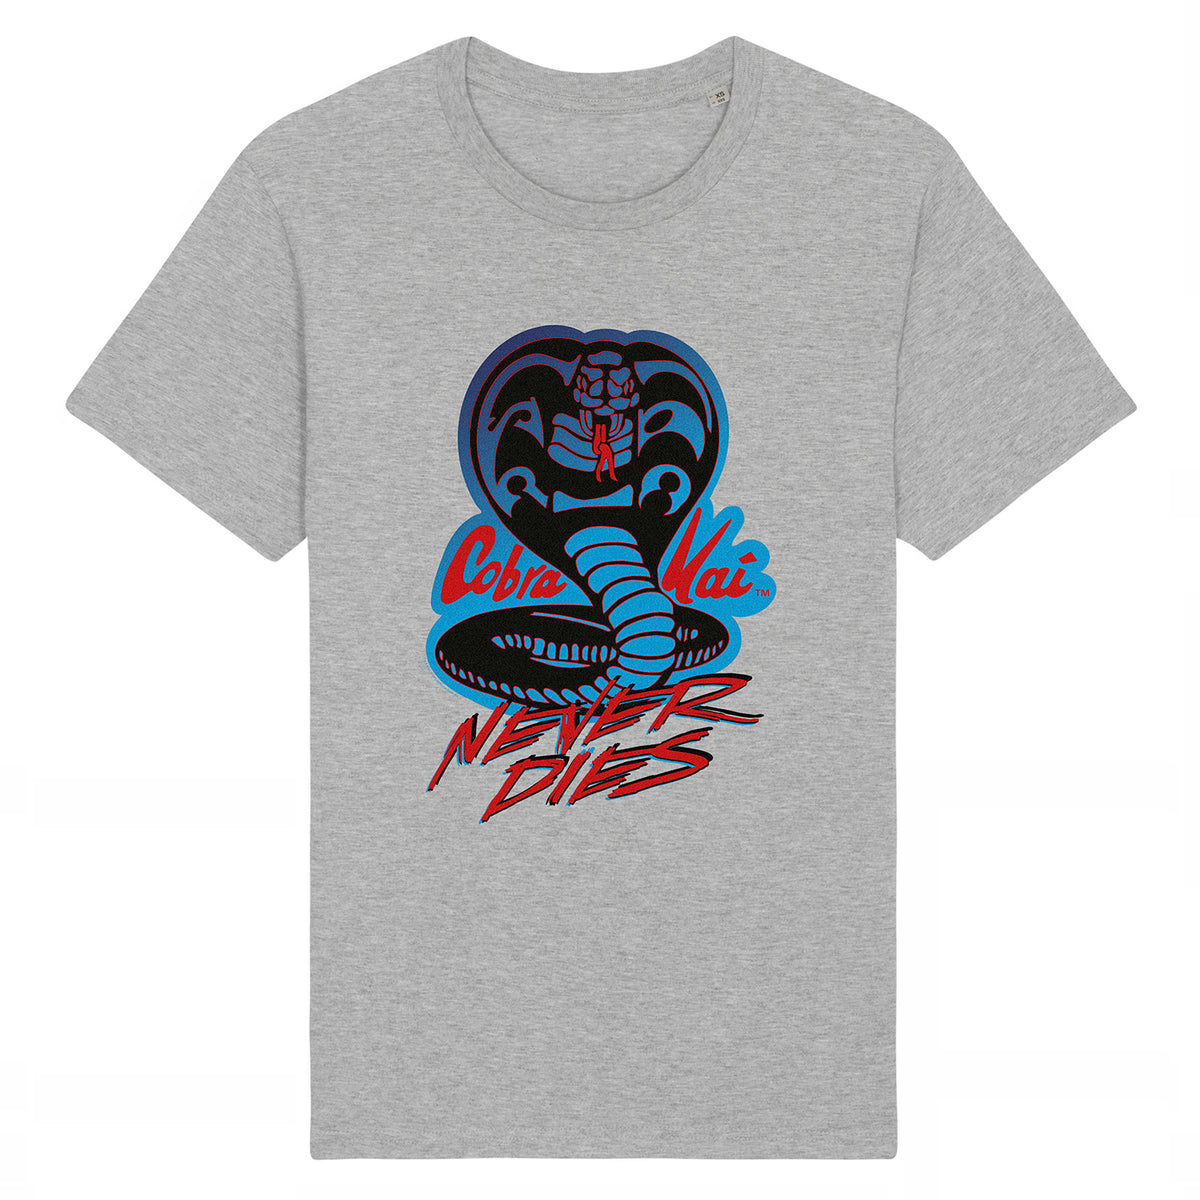 Cobra Kai Never Dies Heather Grey Unisex T-Shirt